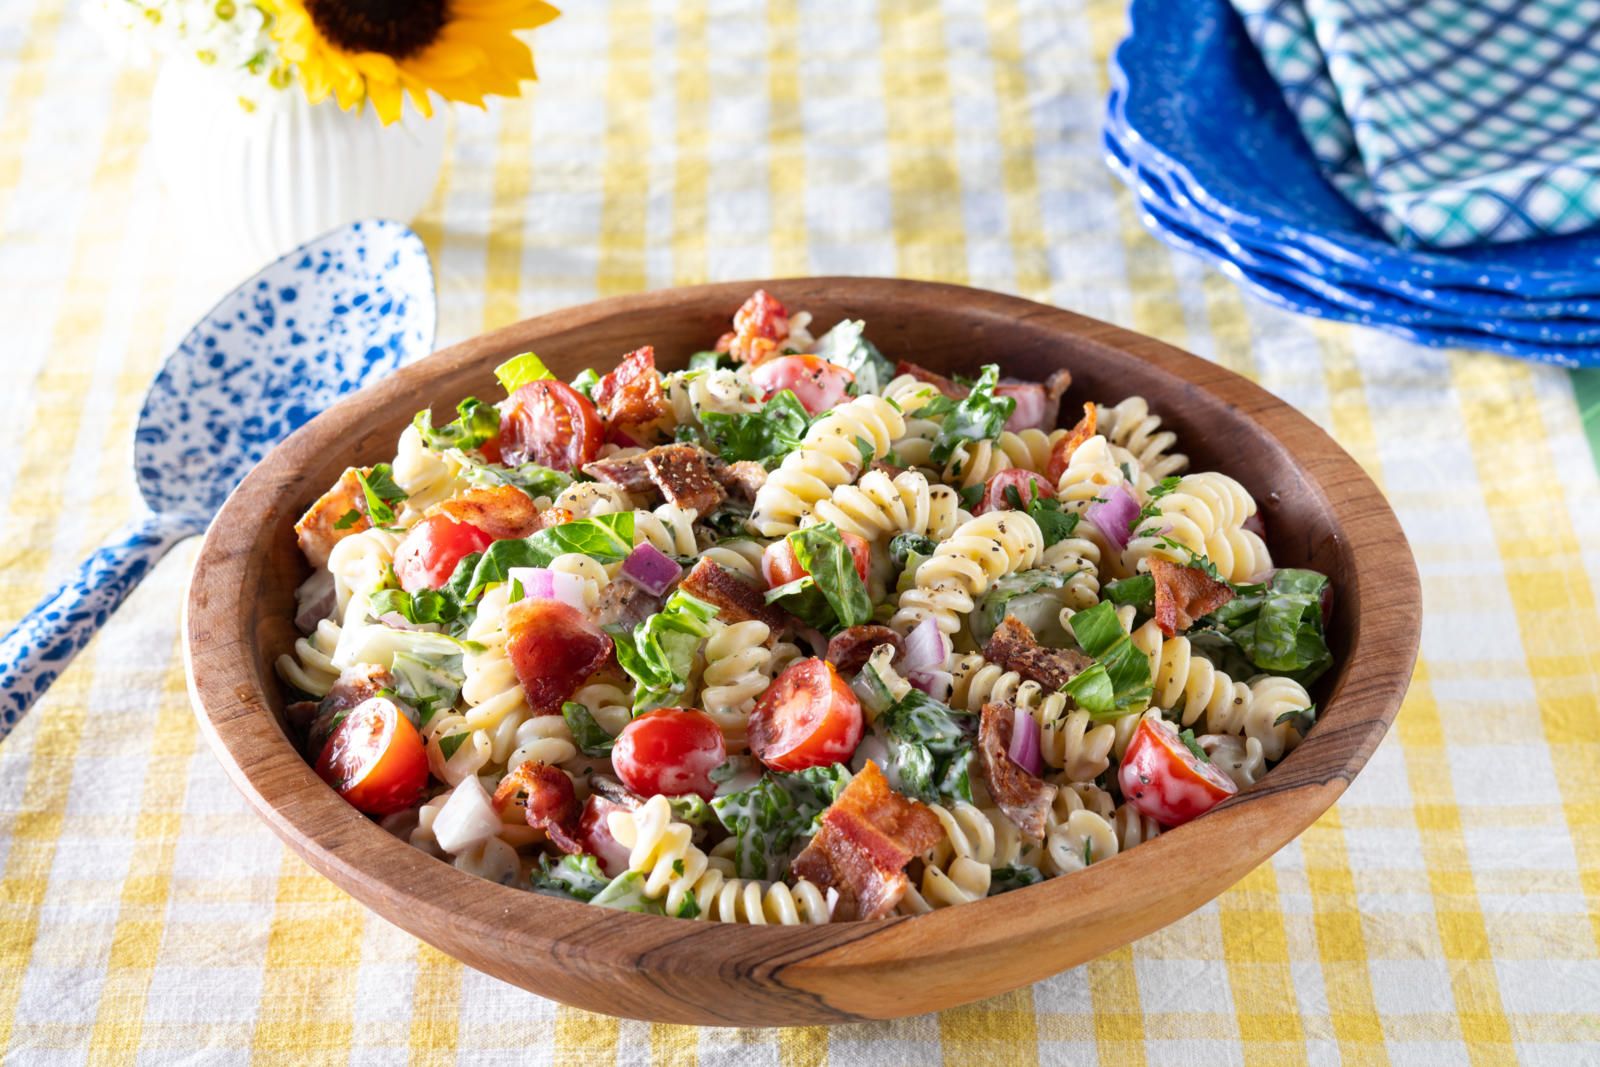 https://hips.hearstapps.com/hmg-prod/images/blt-pasta-salad-recipe-1620336849.jpg